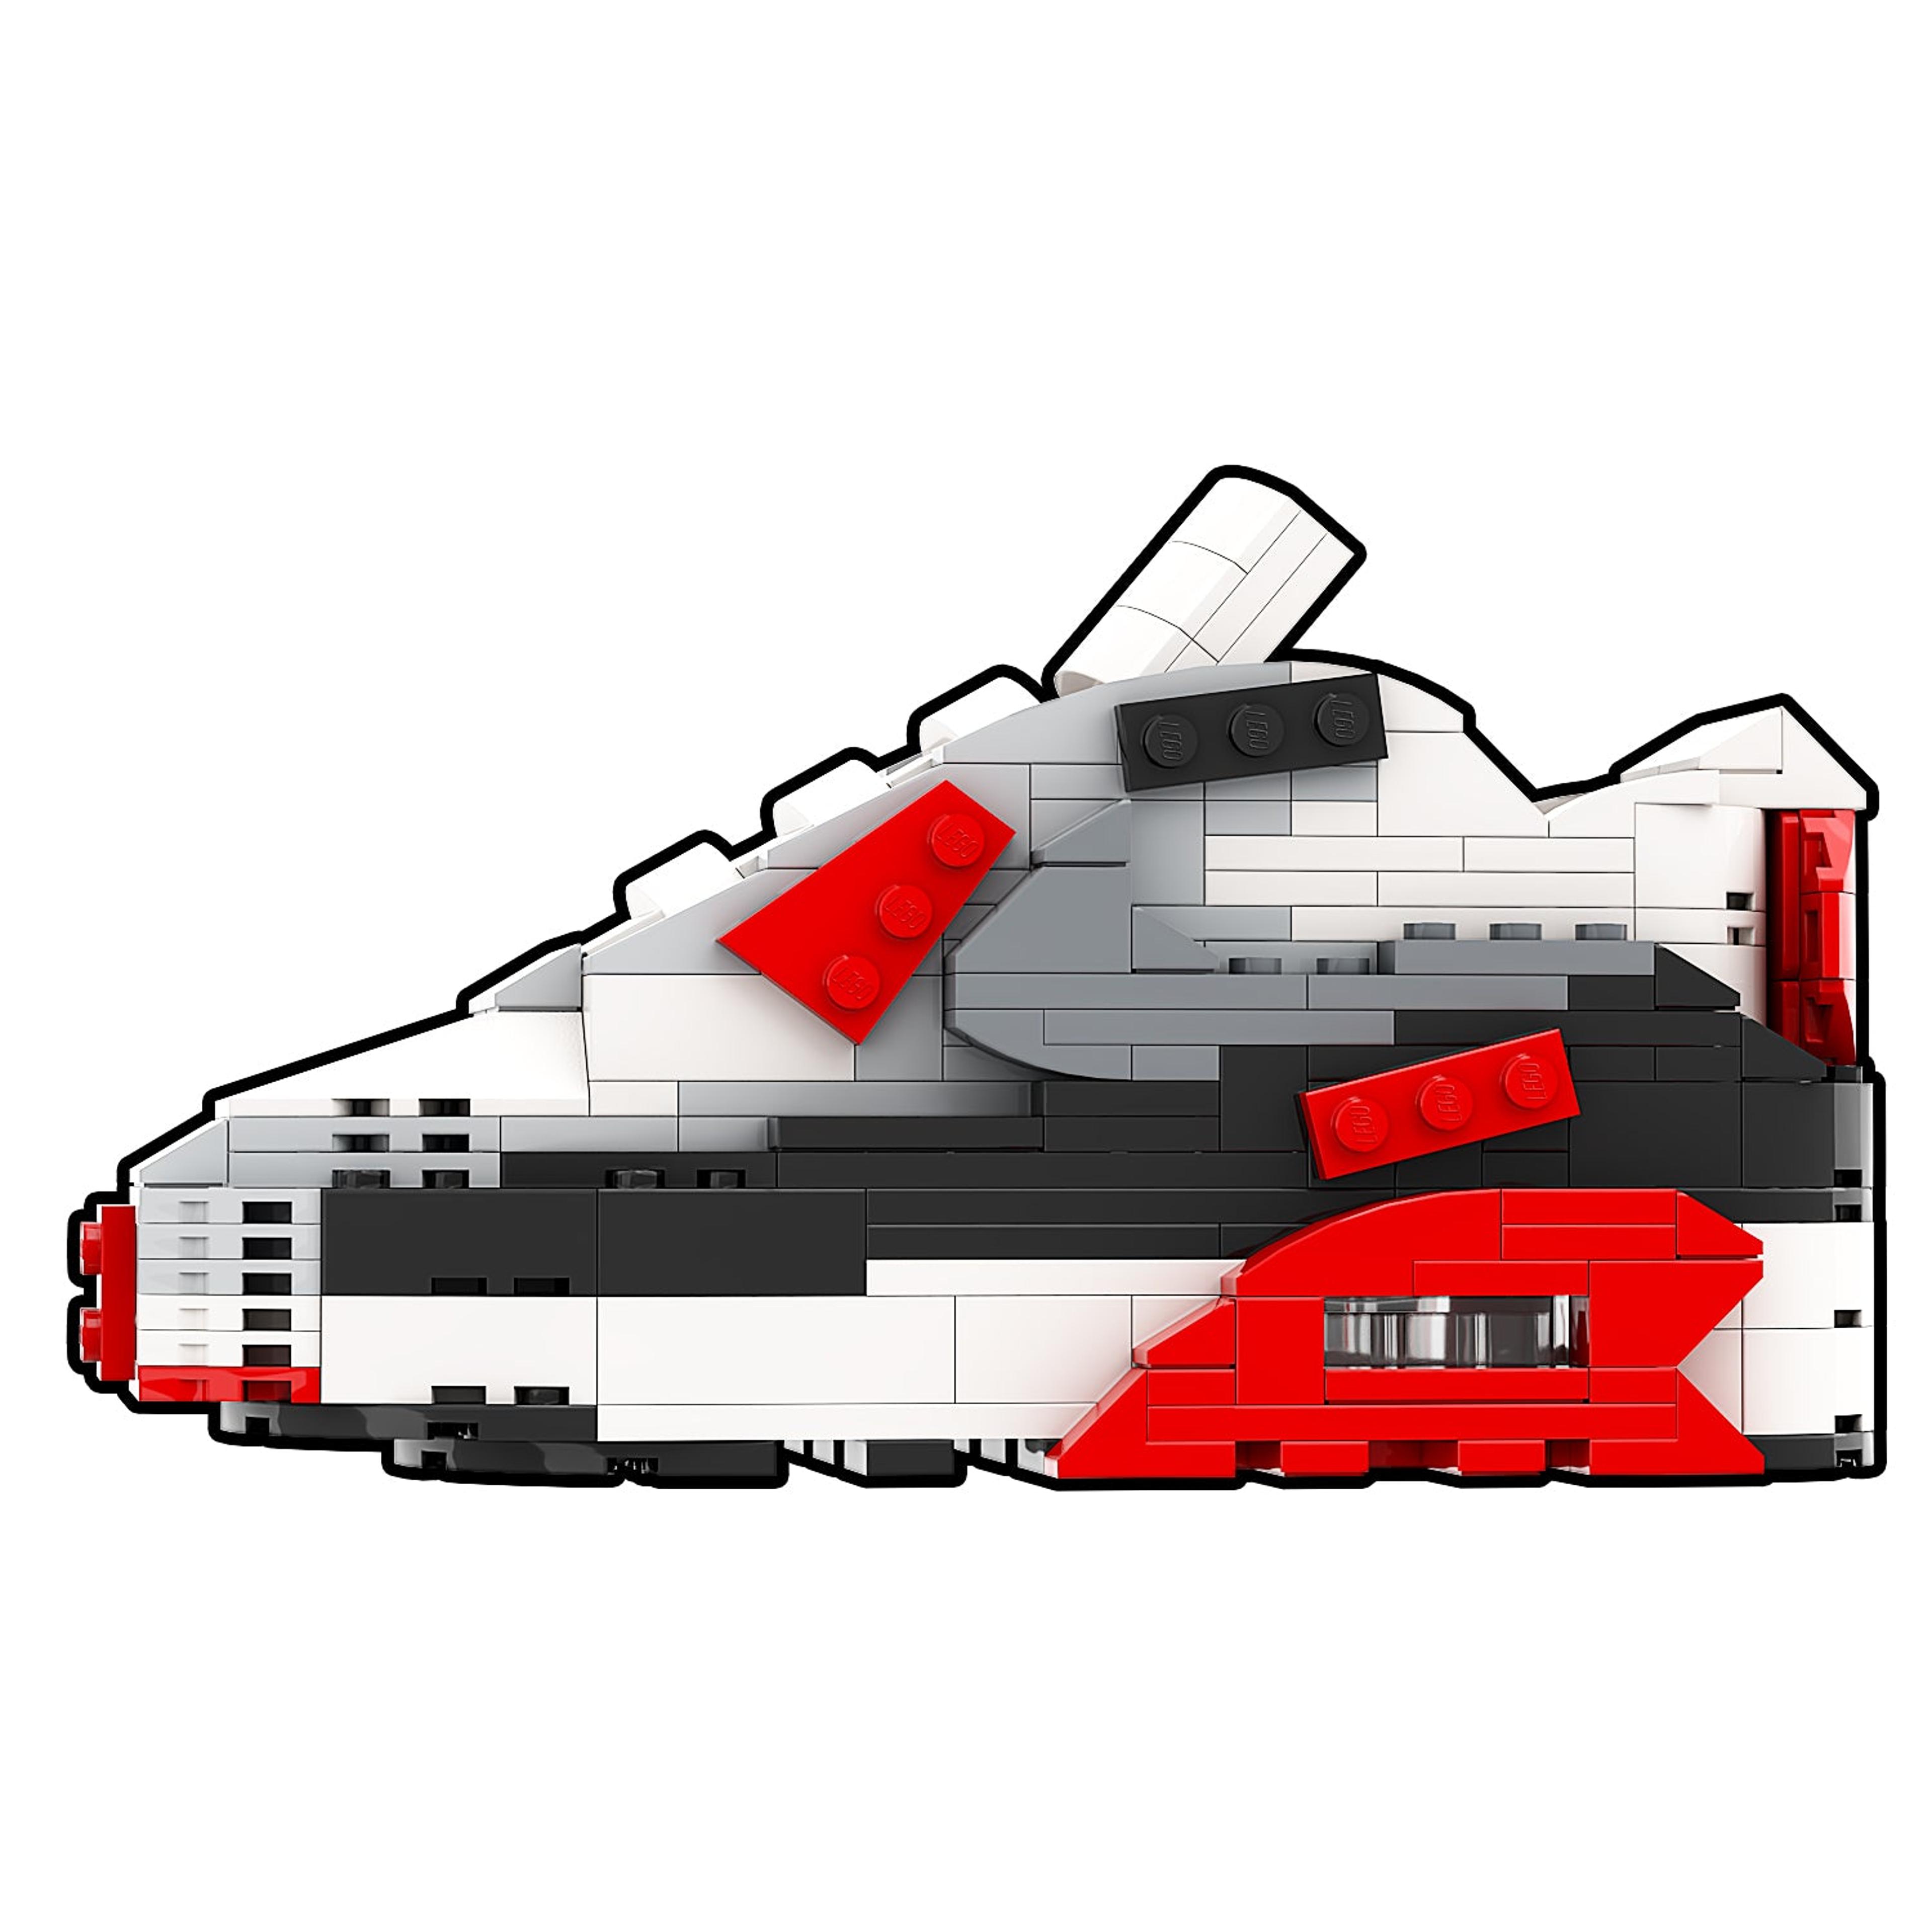 Alternate View 1 of REGULAR "Air Max 90 Infrared" Sneaker Bricks with Mini Figure